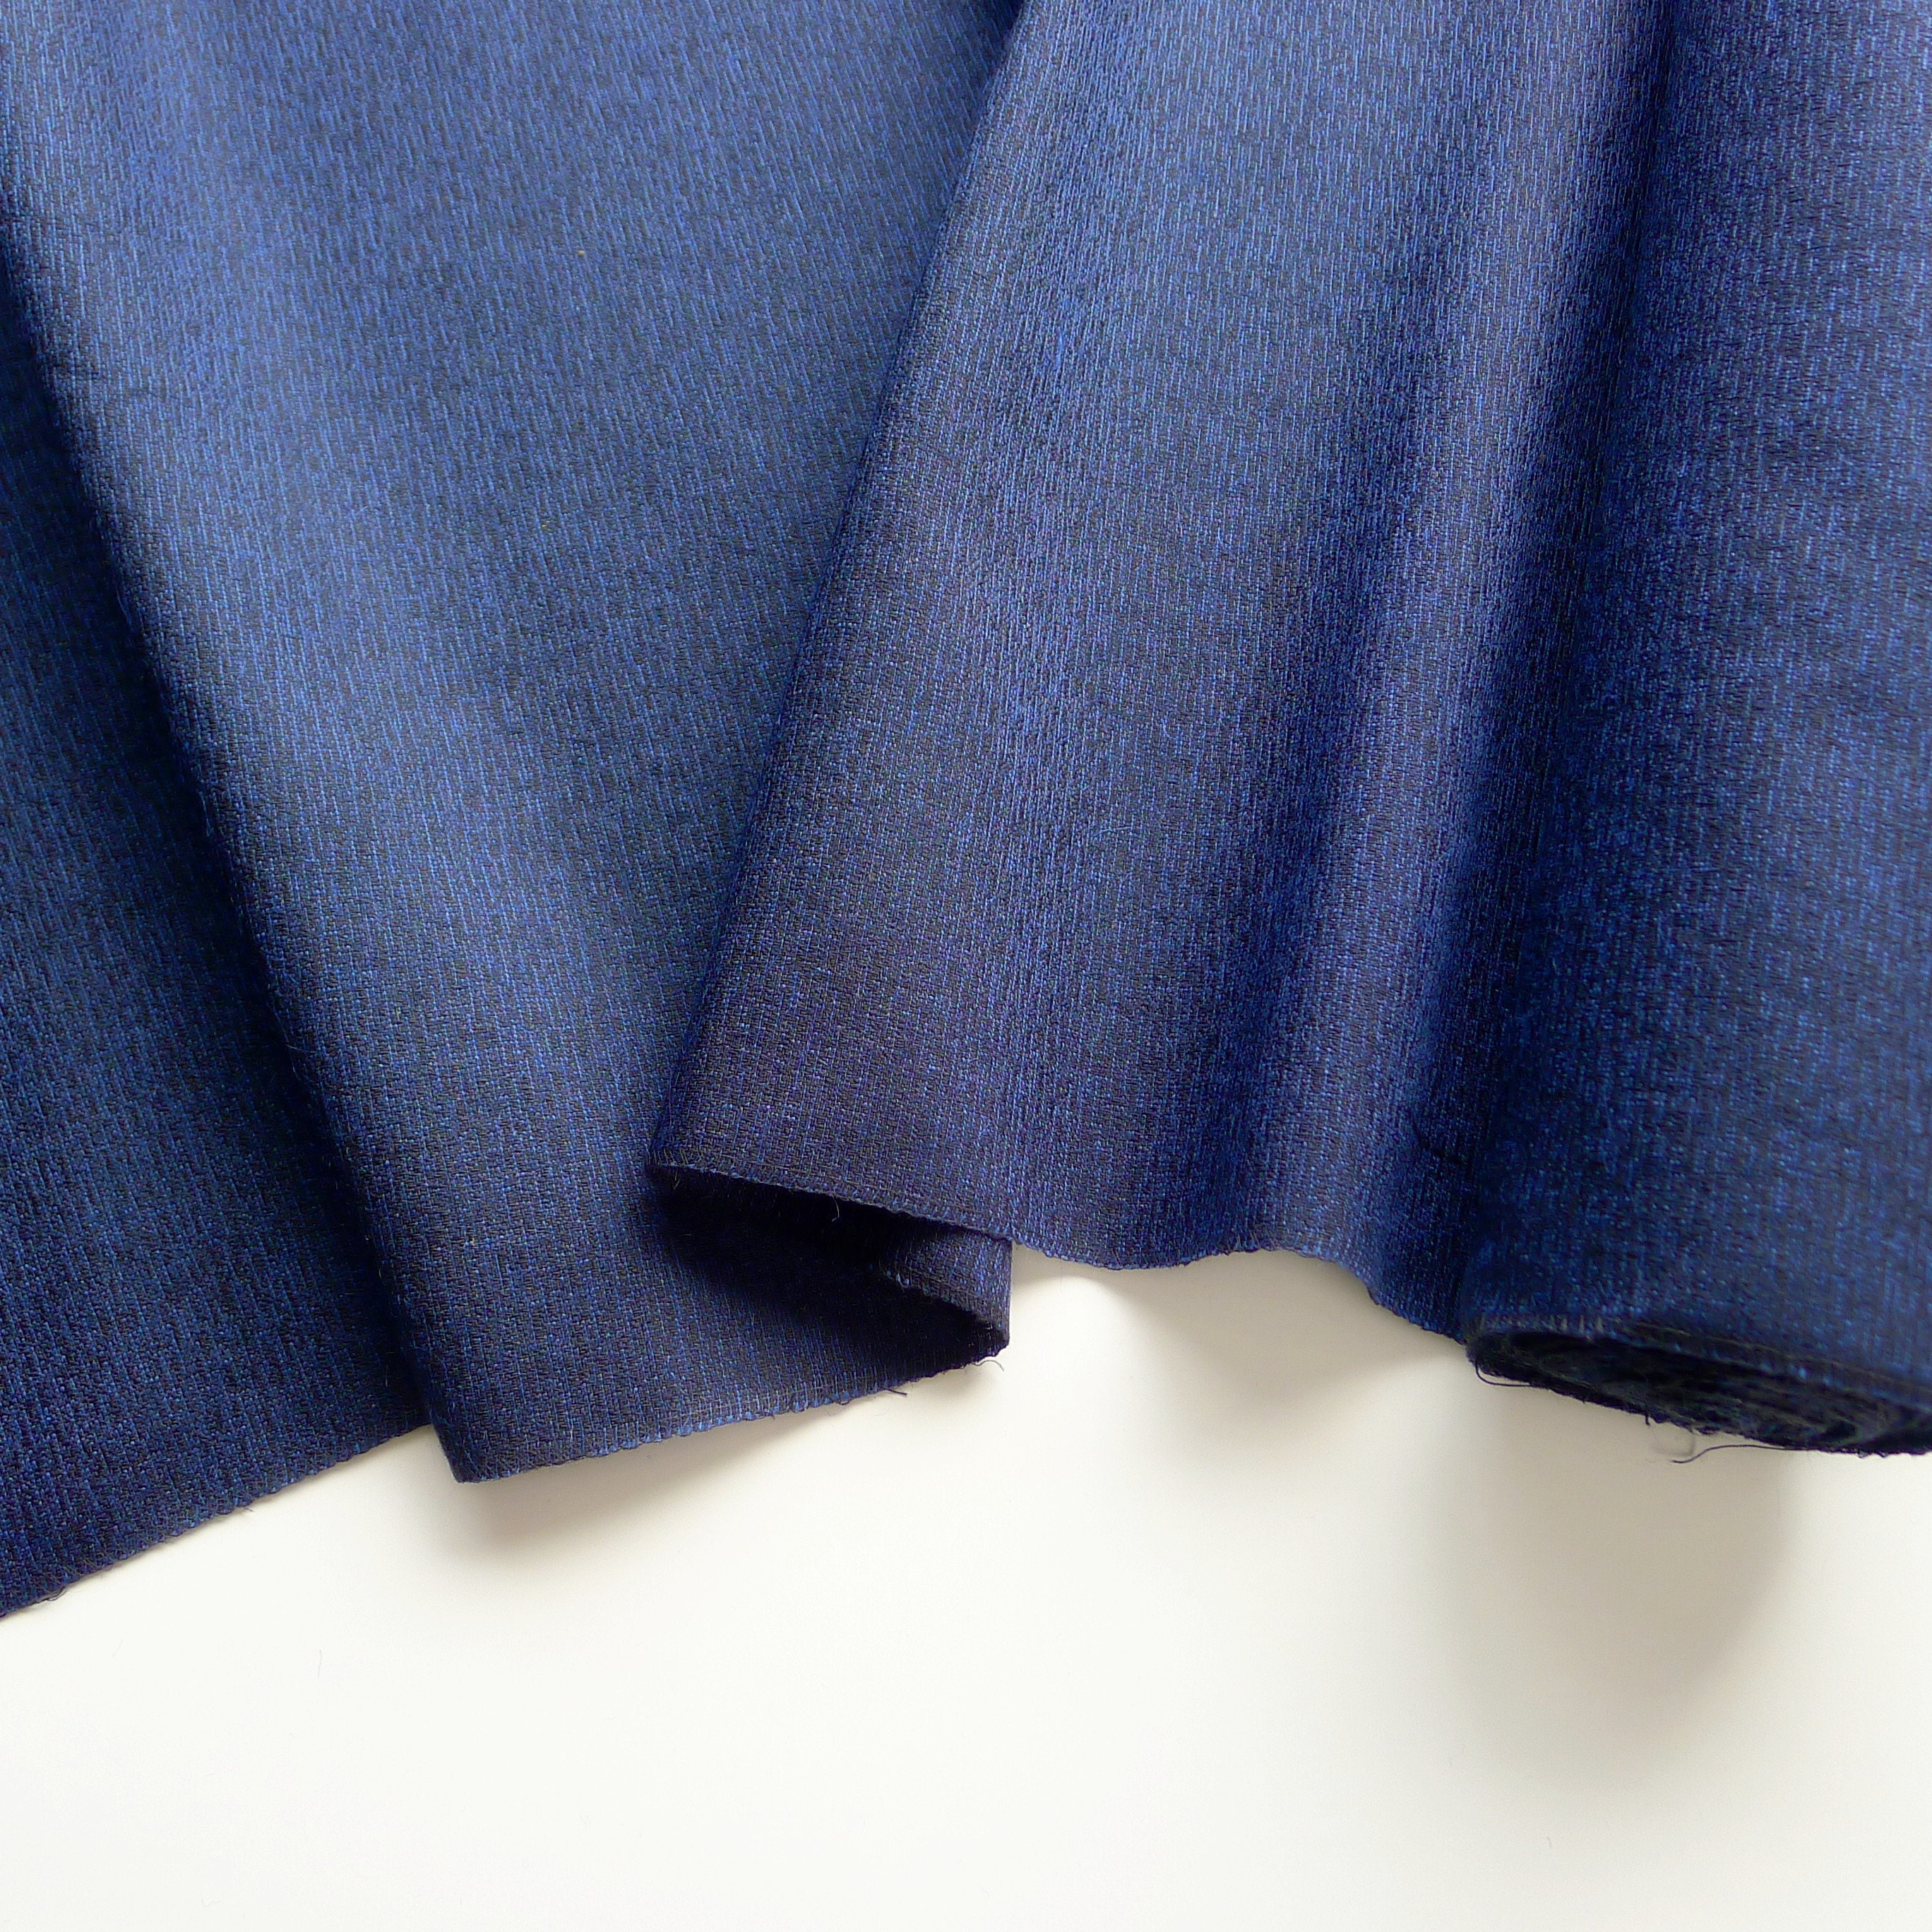 Black & Blue Wool Blend Kimono Fabric, Unused Bolt By The Yard